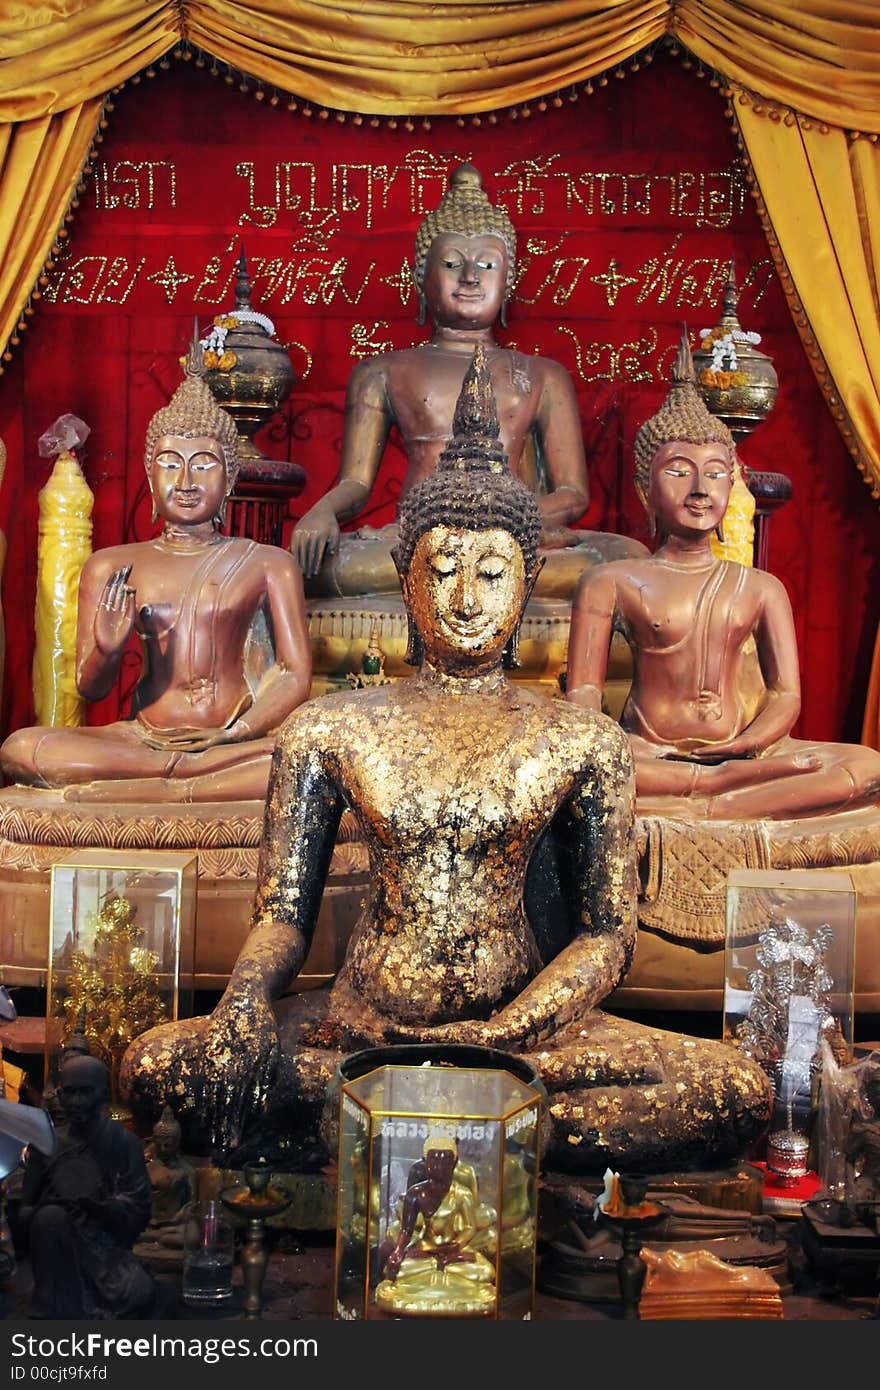 Interior of Wat Chalong, Phuket, Thailand - travel and tourism. Interior of Wat Chalong, Phuket, Thailand - travel and tourism